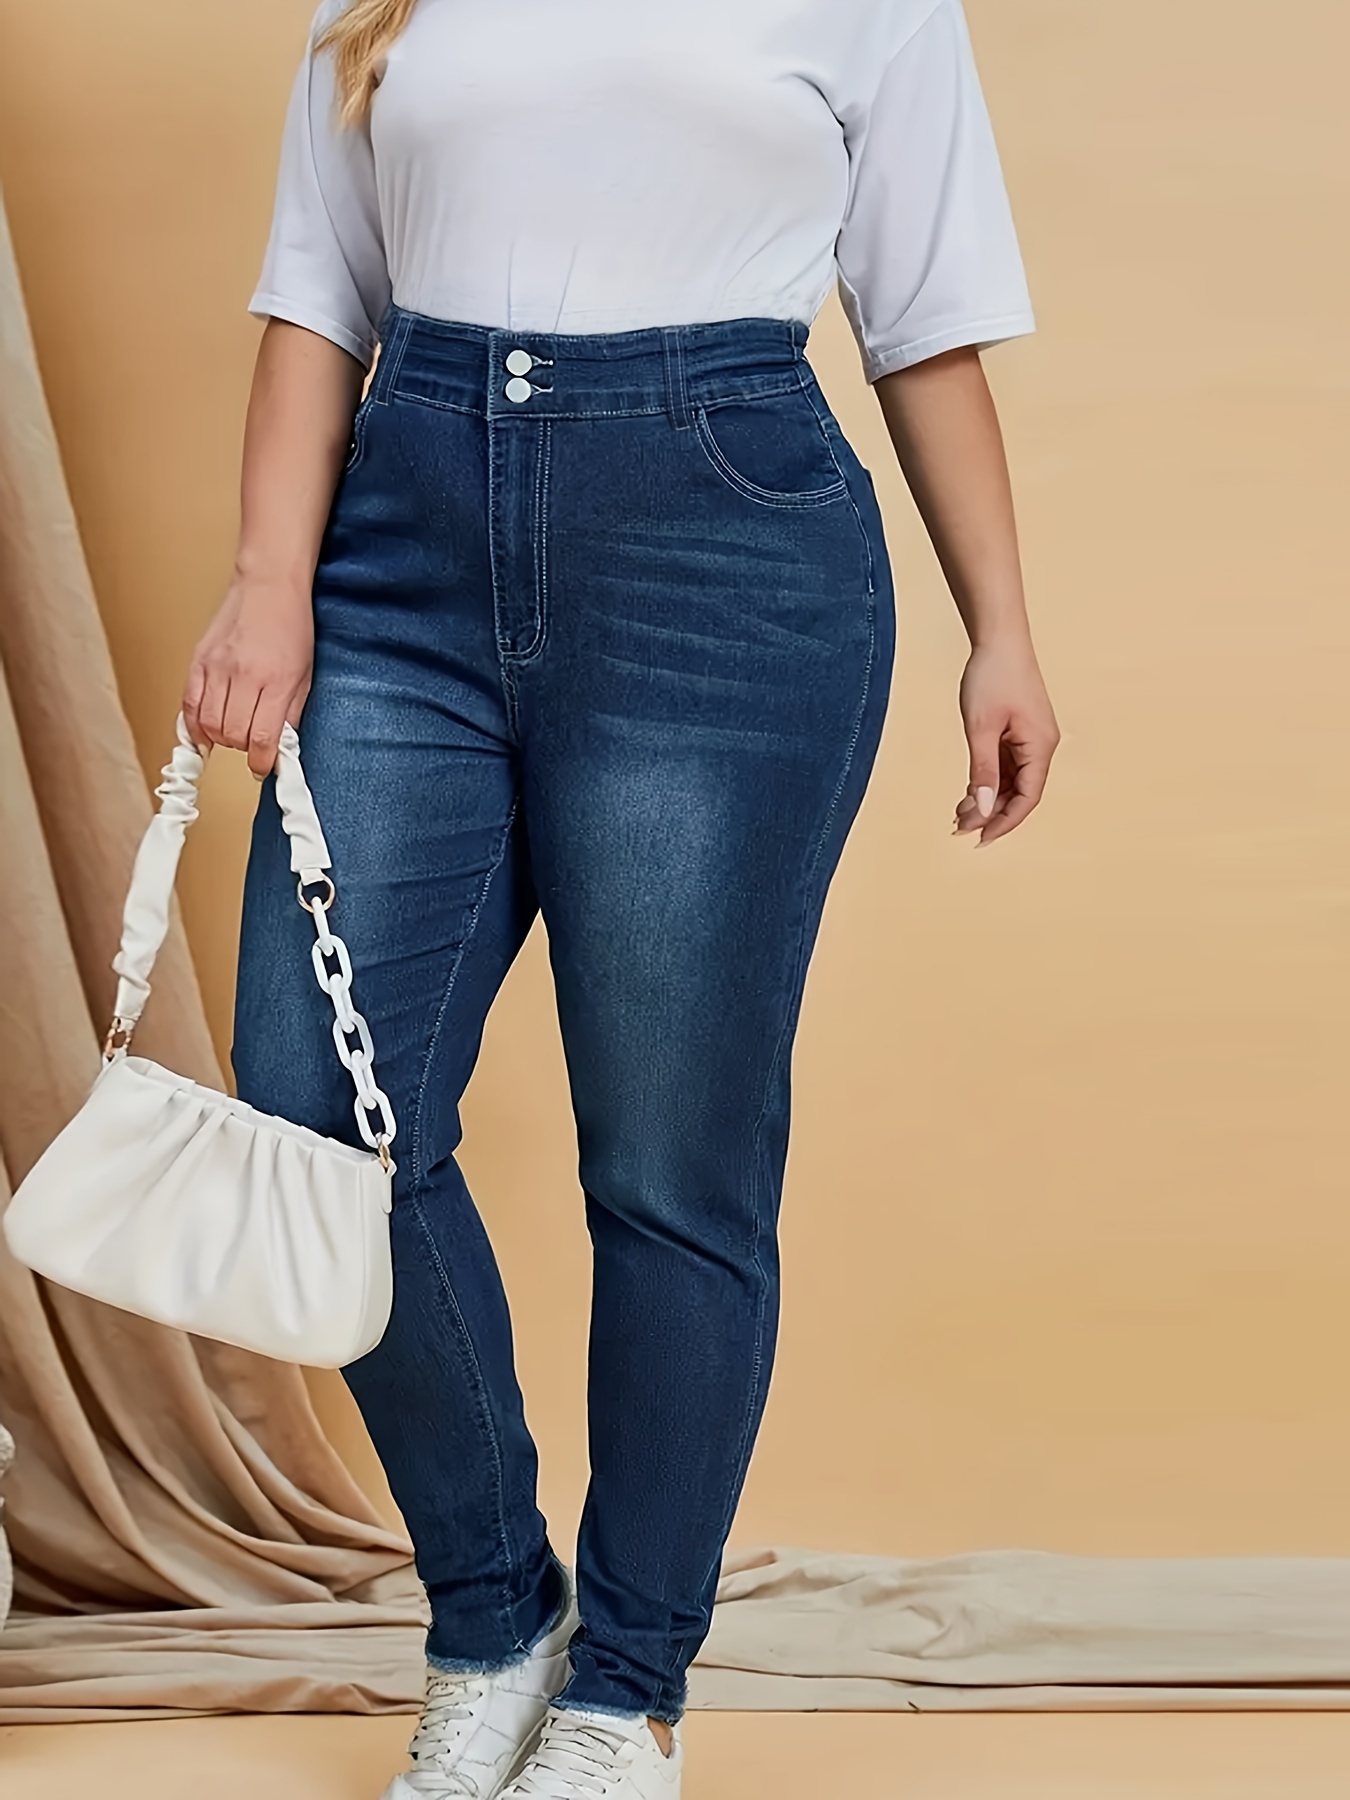 XZNGL Womens Jeans Size 14 Fashion Women Pockets Button Mid Waist